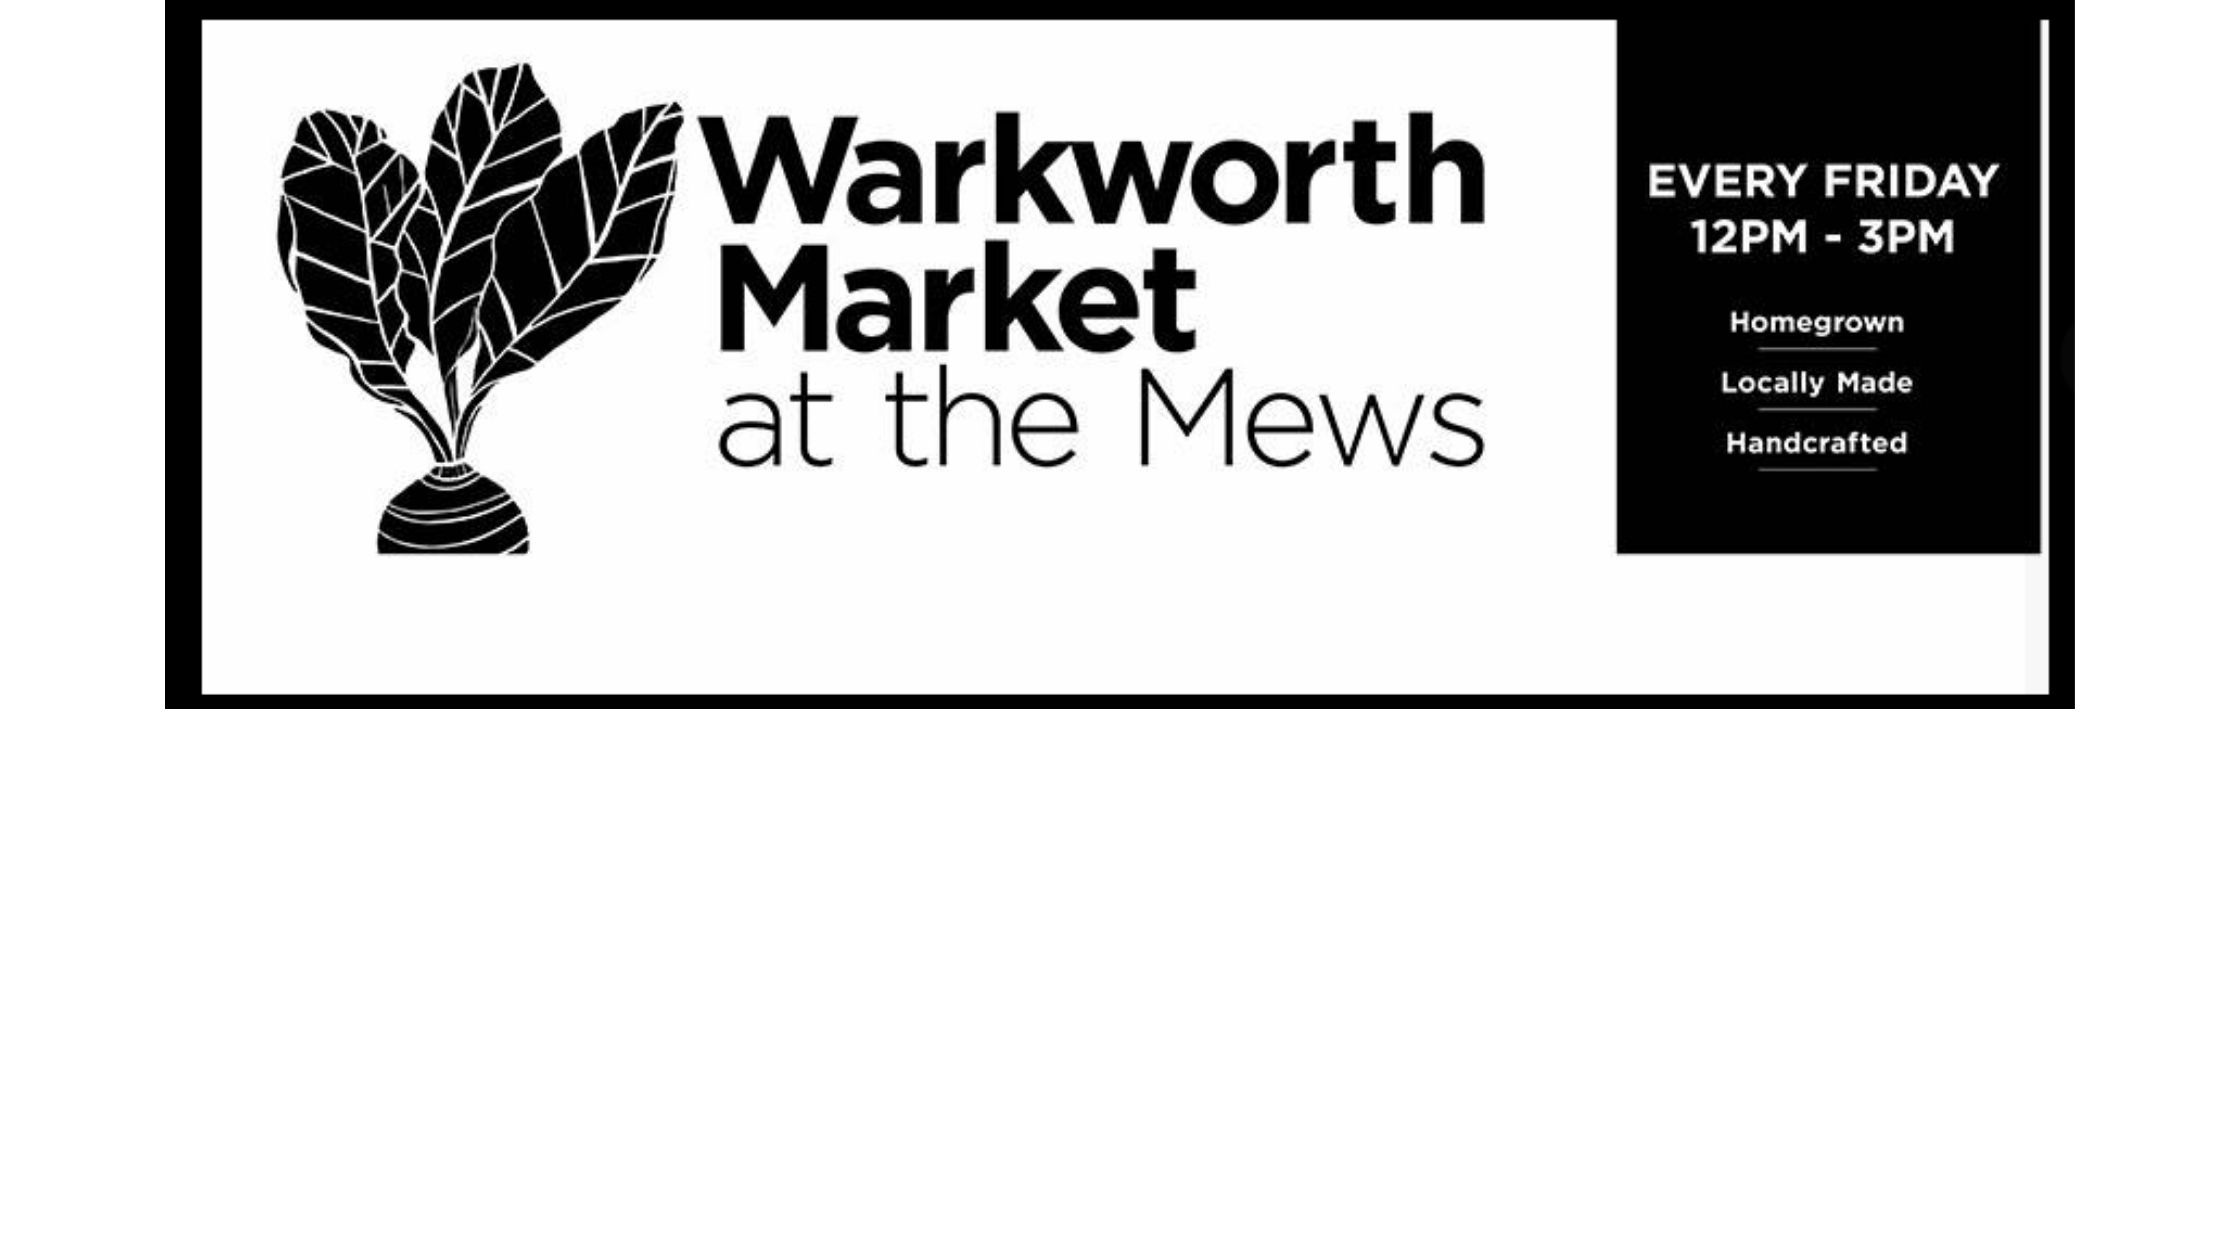 Warkworth Market at the Mews